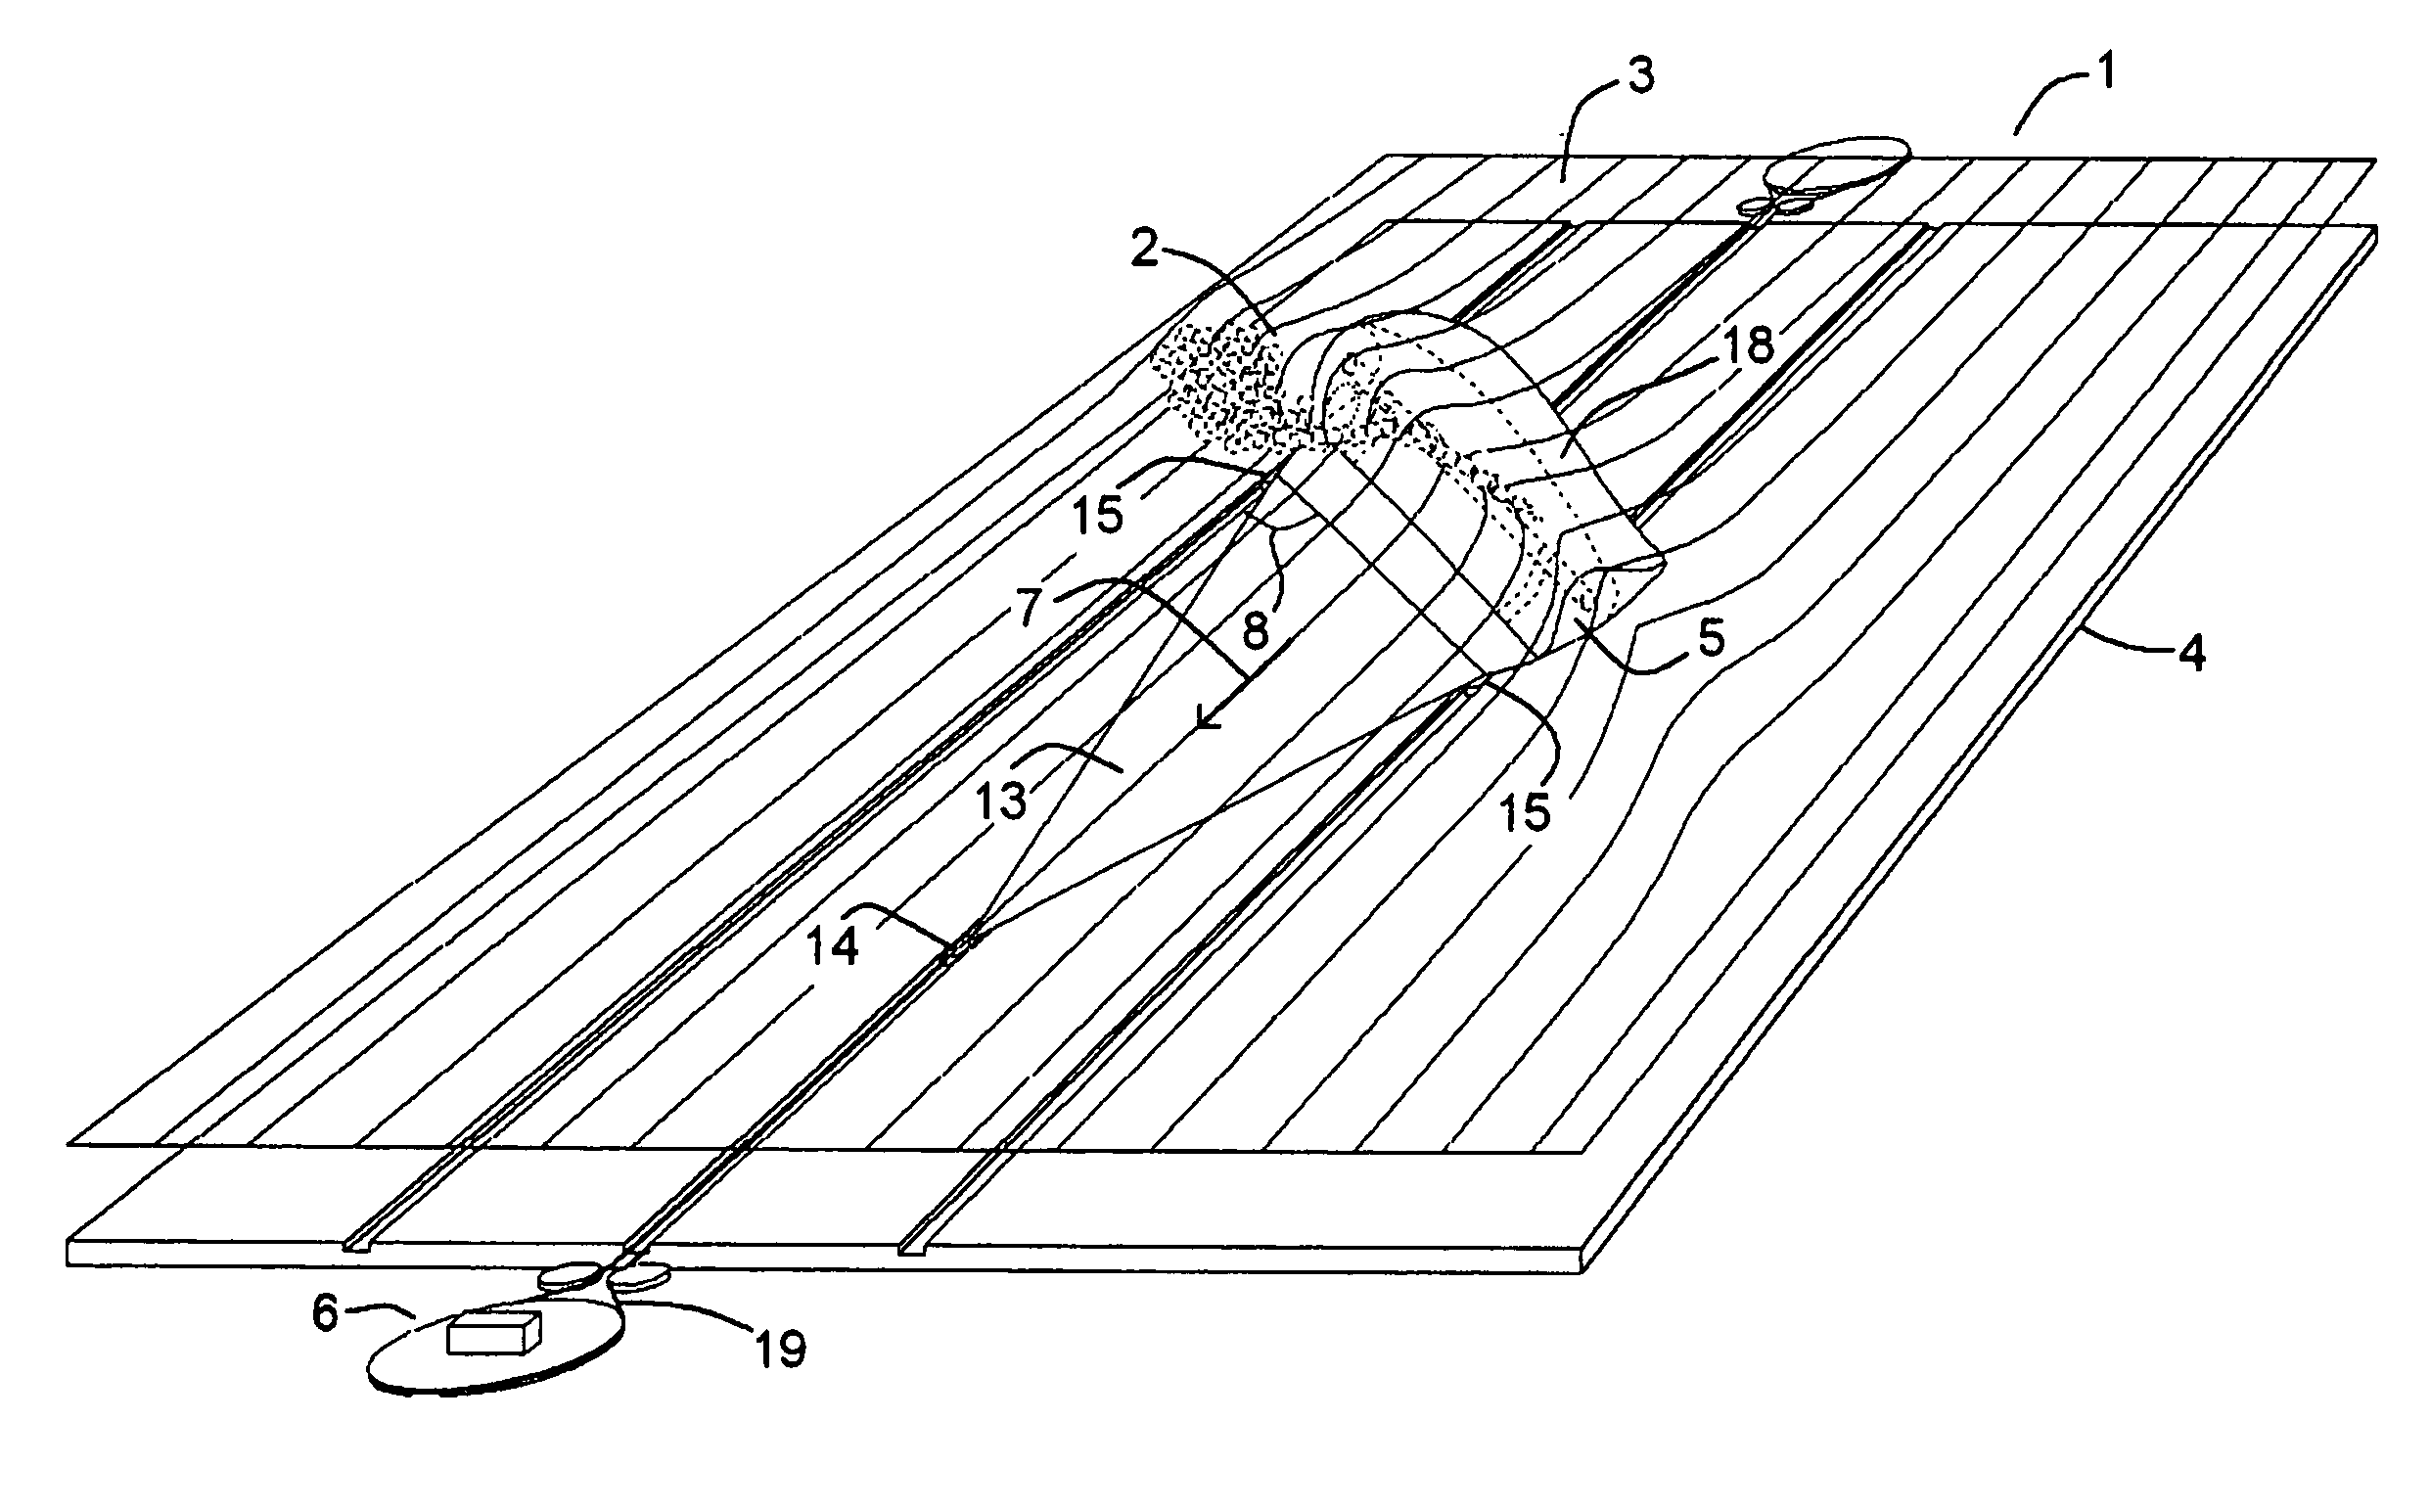 Wave-generating apparatus